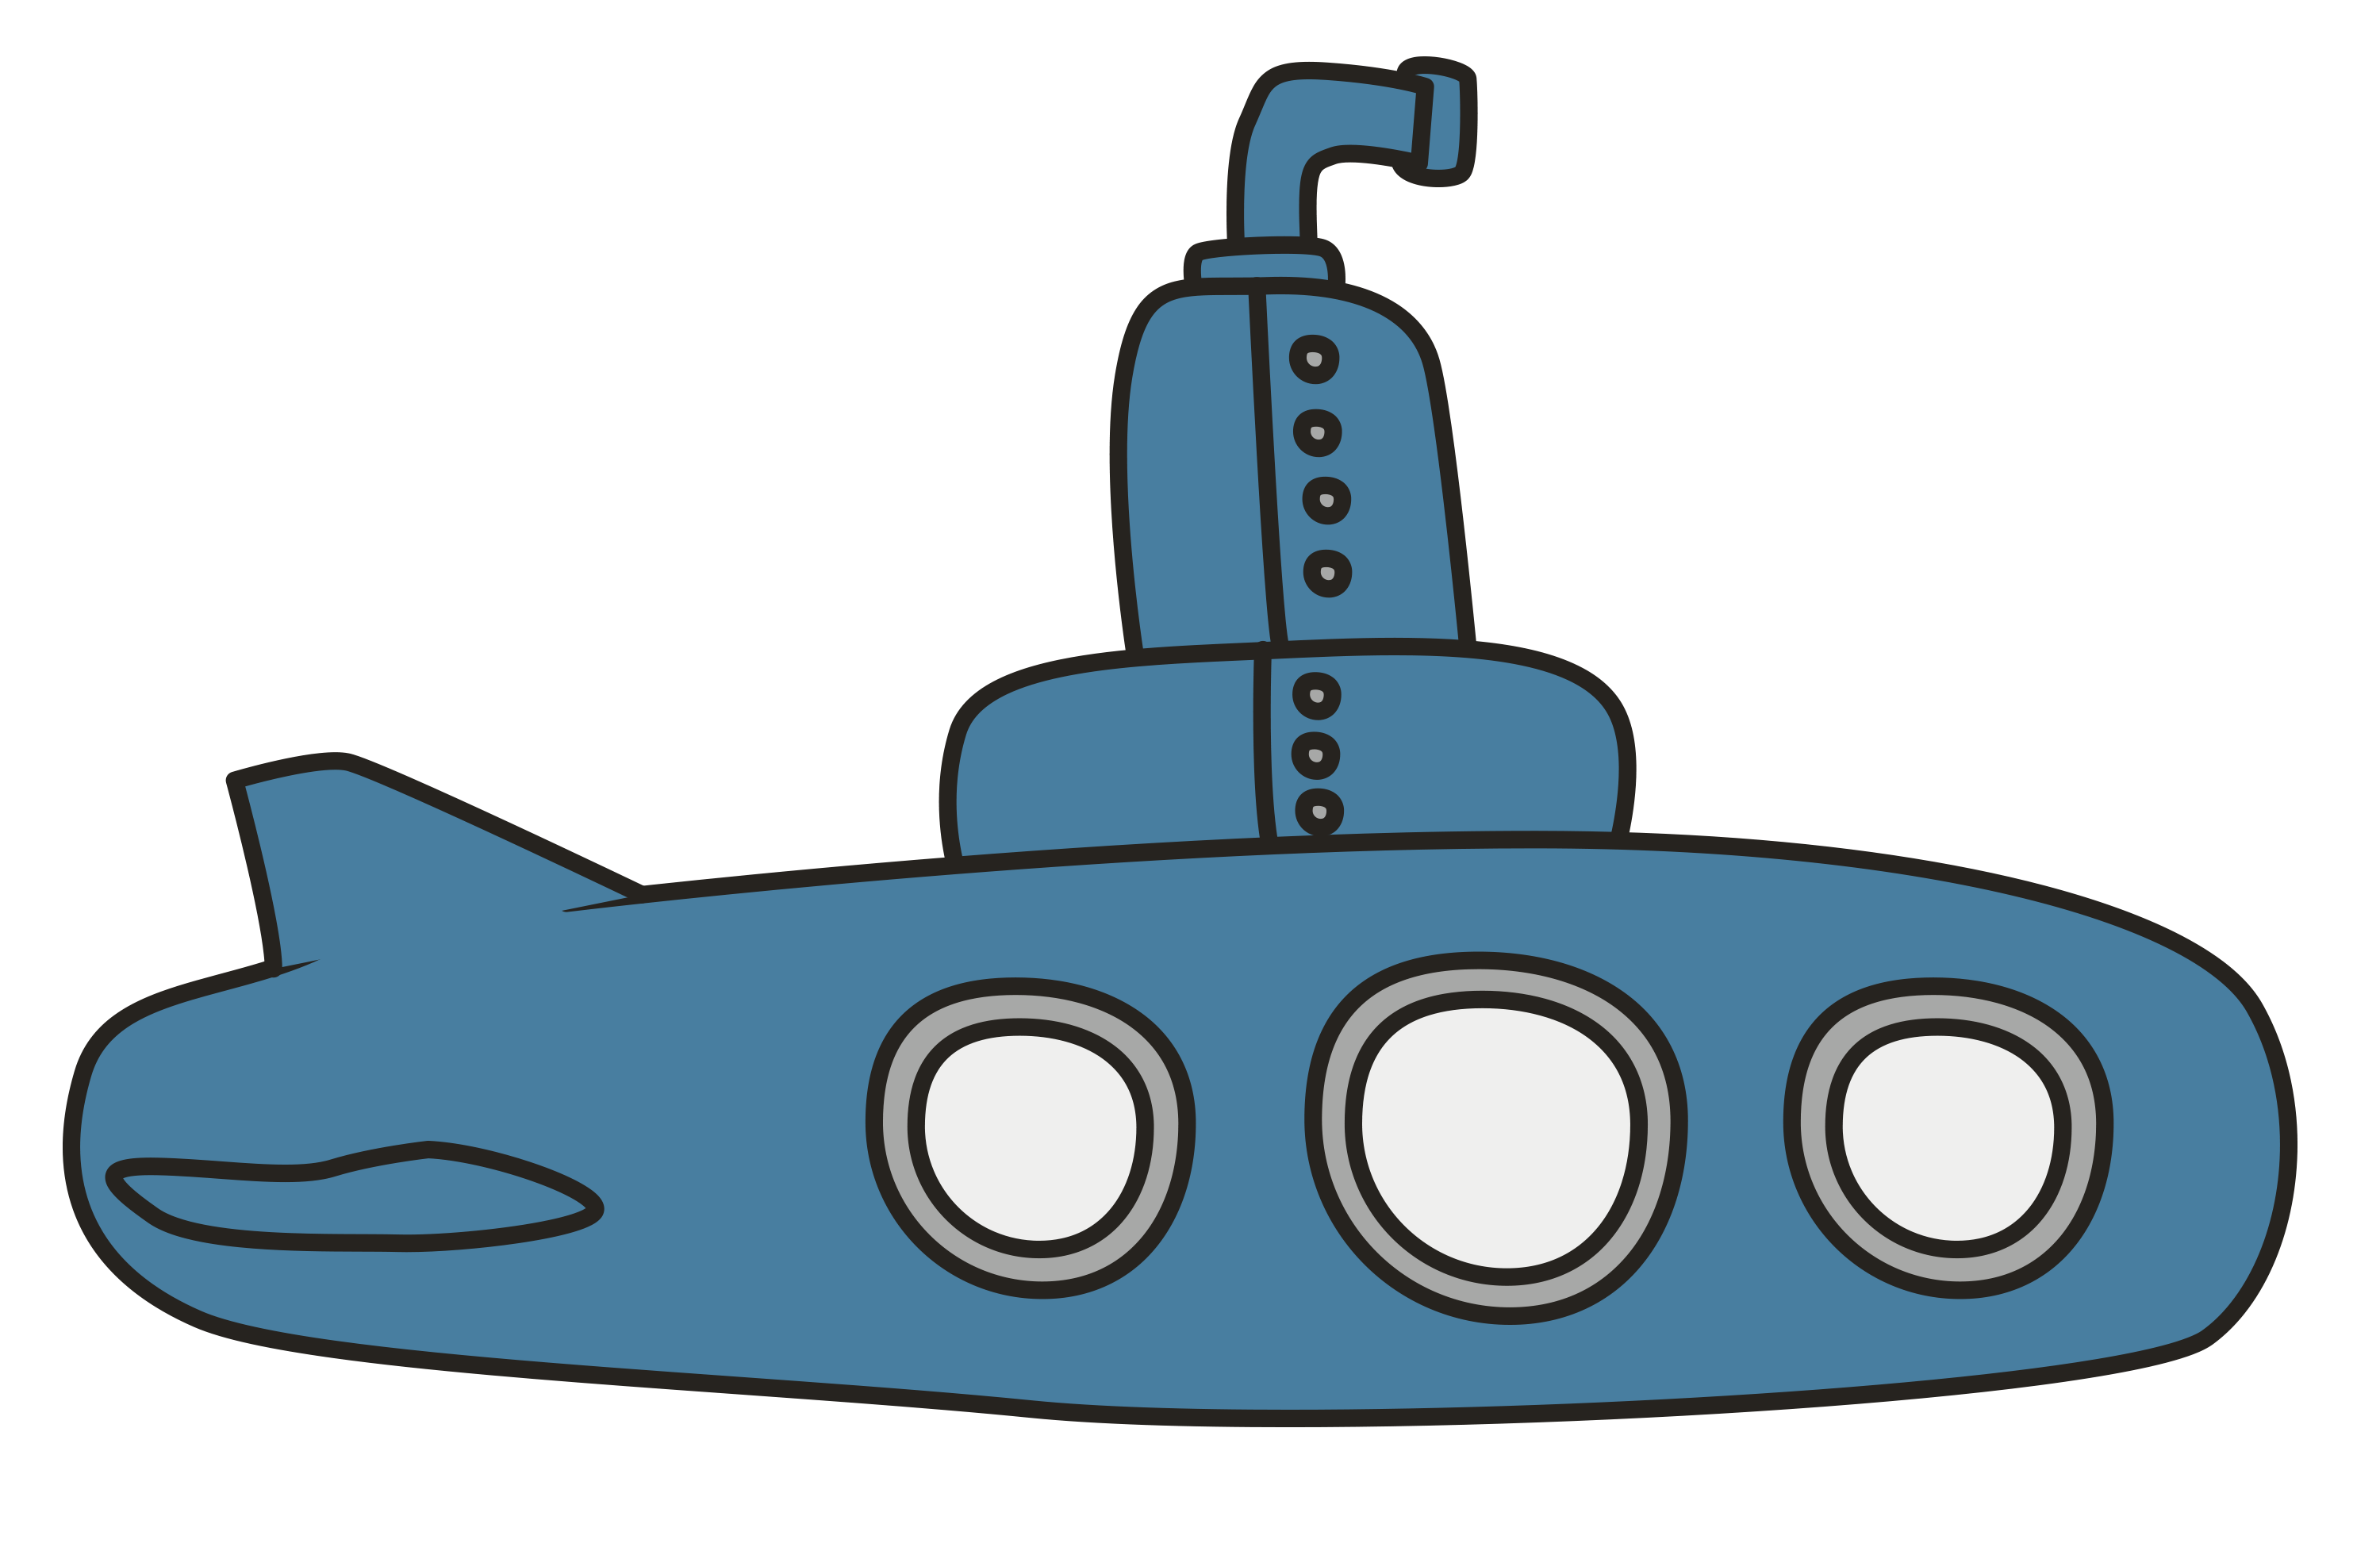 A blue submarine.